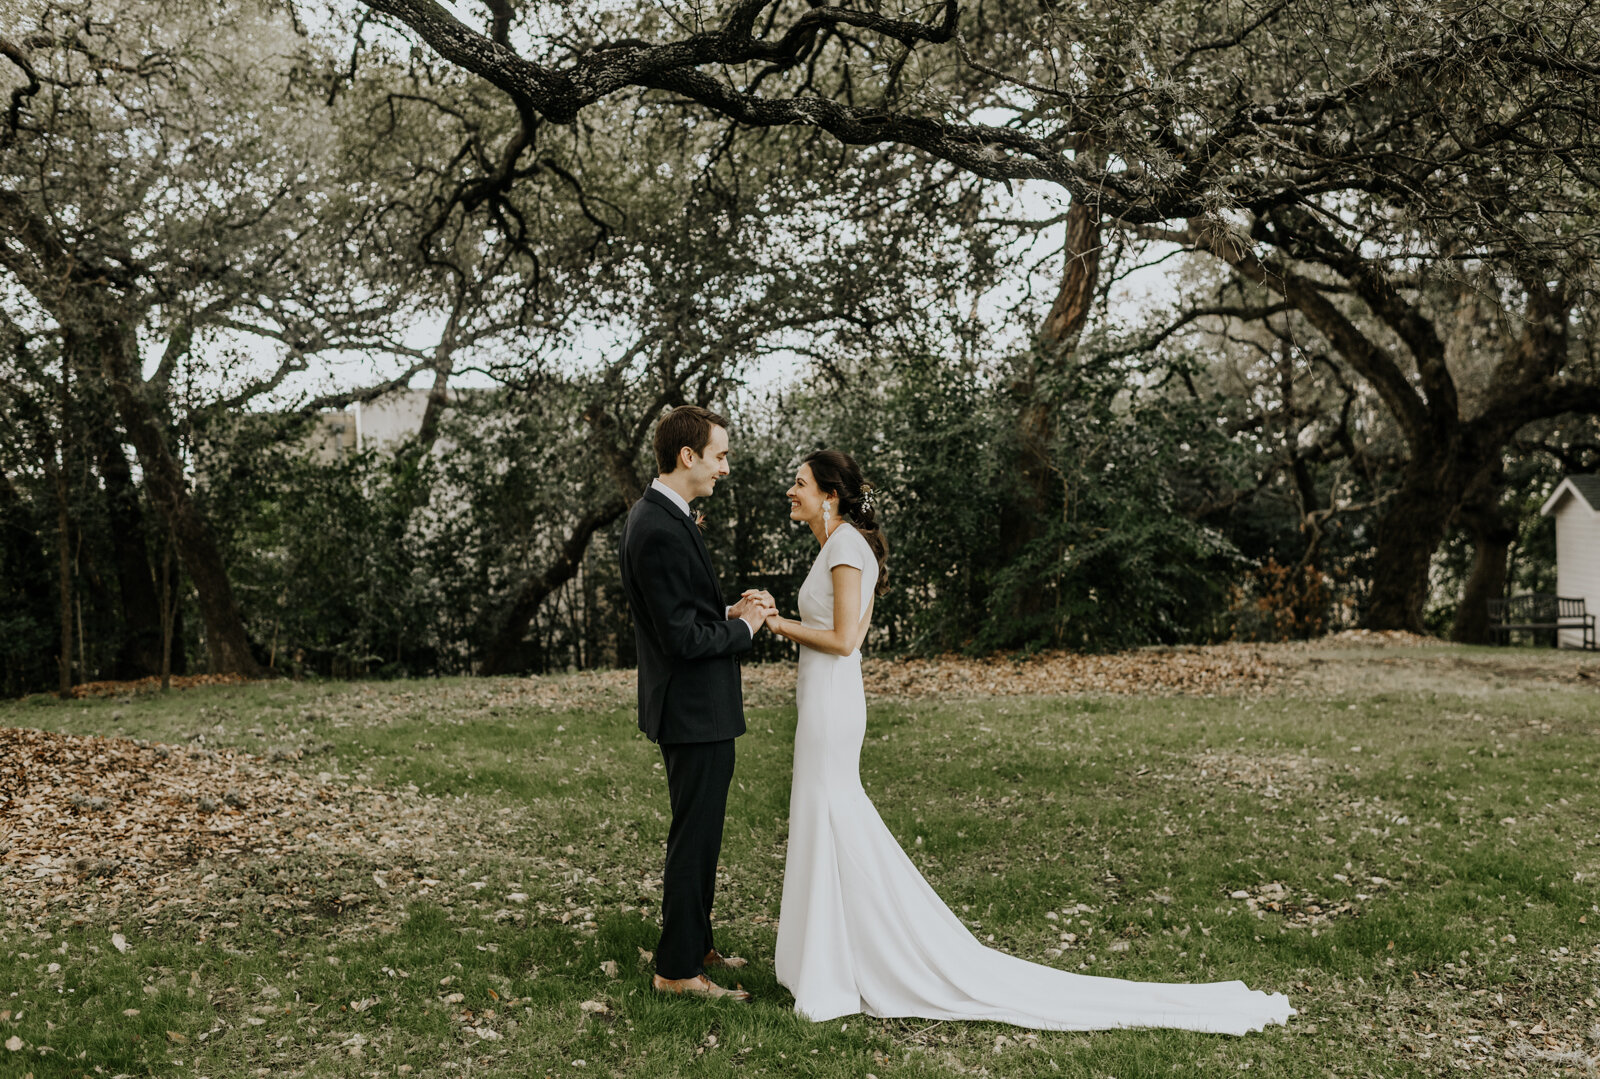 Austin, Texas Bride and Groom First Look Wedding Day Photos